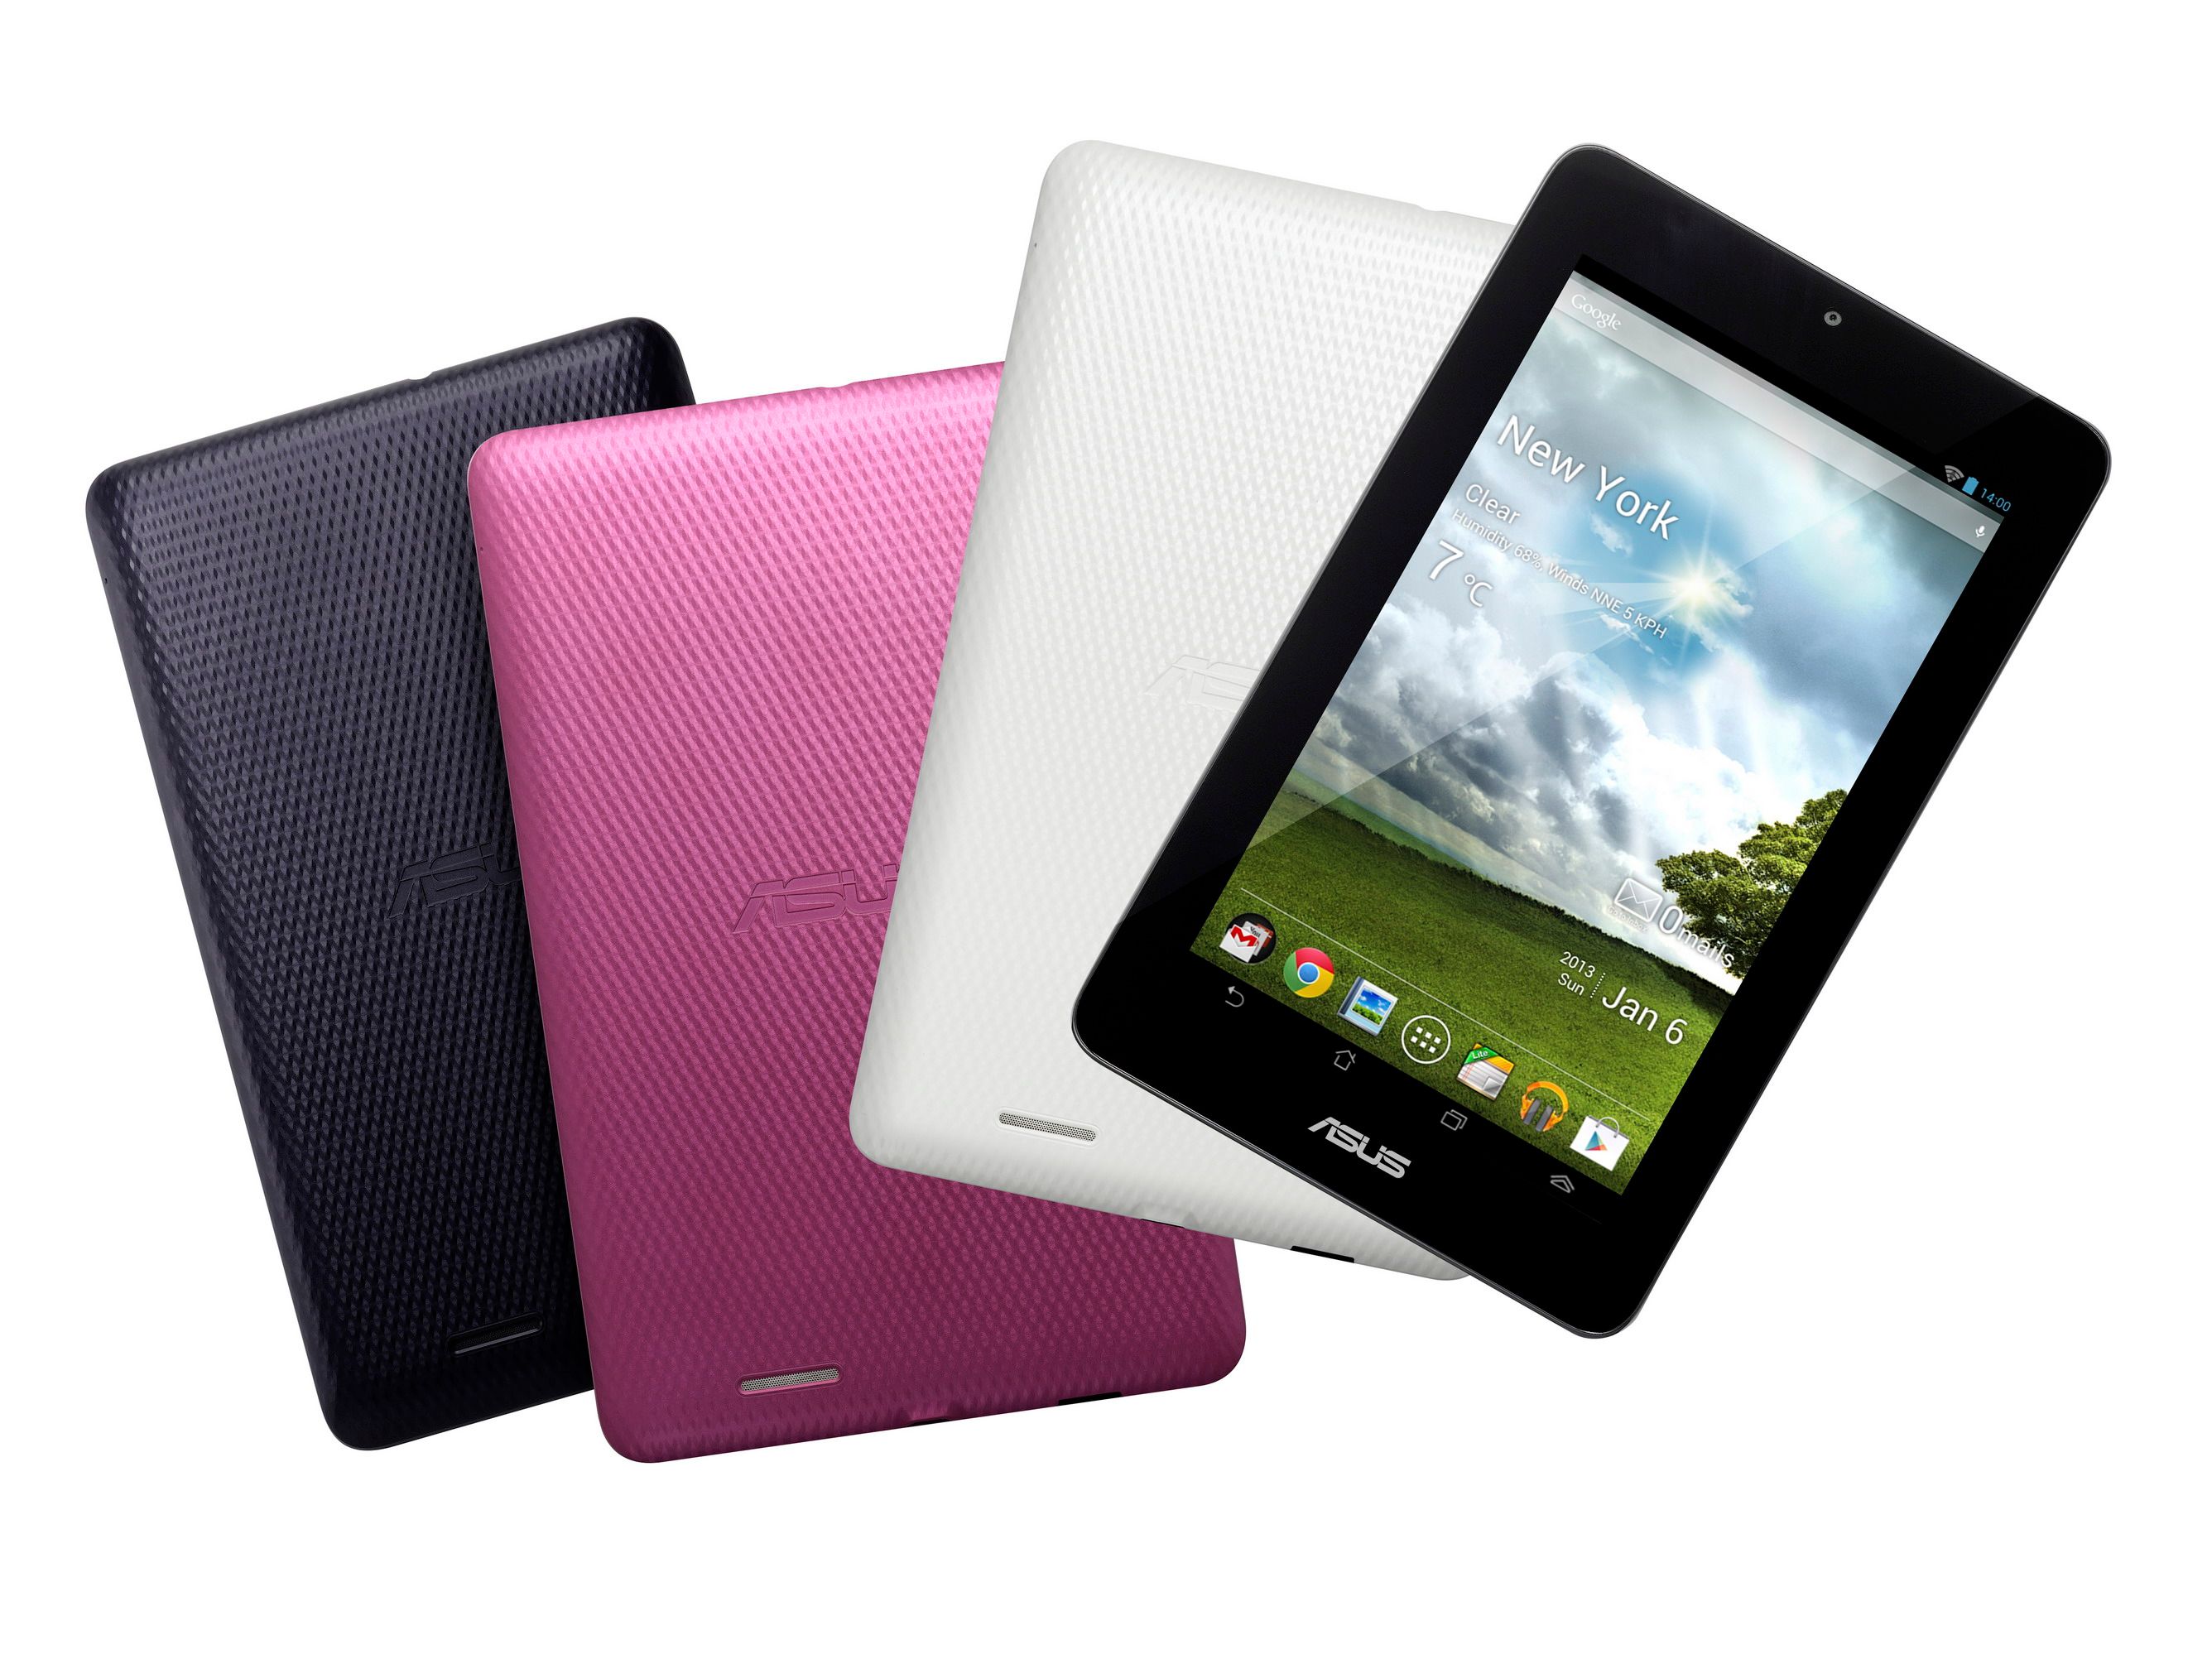 [PR NEWS] Asus เปิดตัว Memo Pad Tablet น้องใหม่ ราคาโดนใจ 4,900 บาท